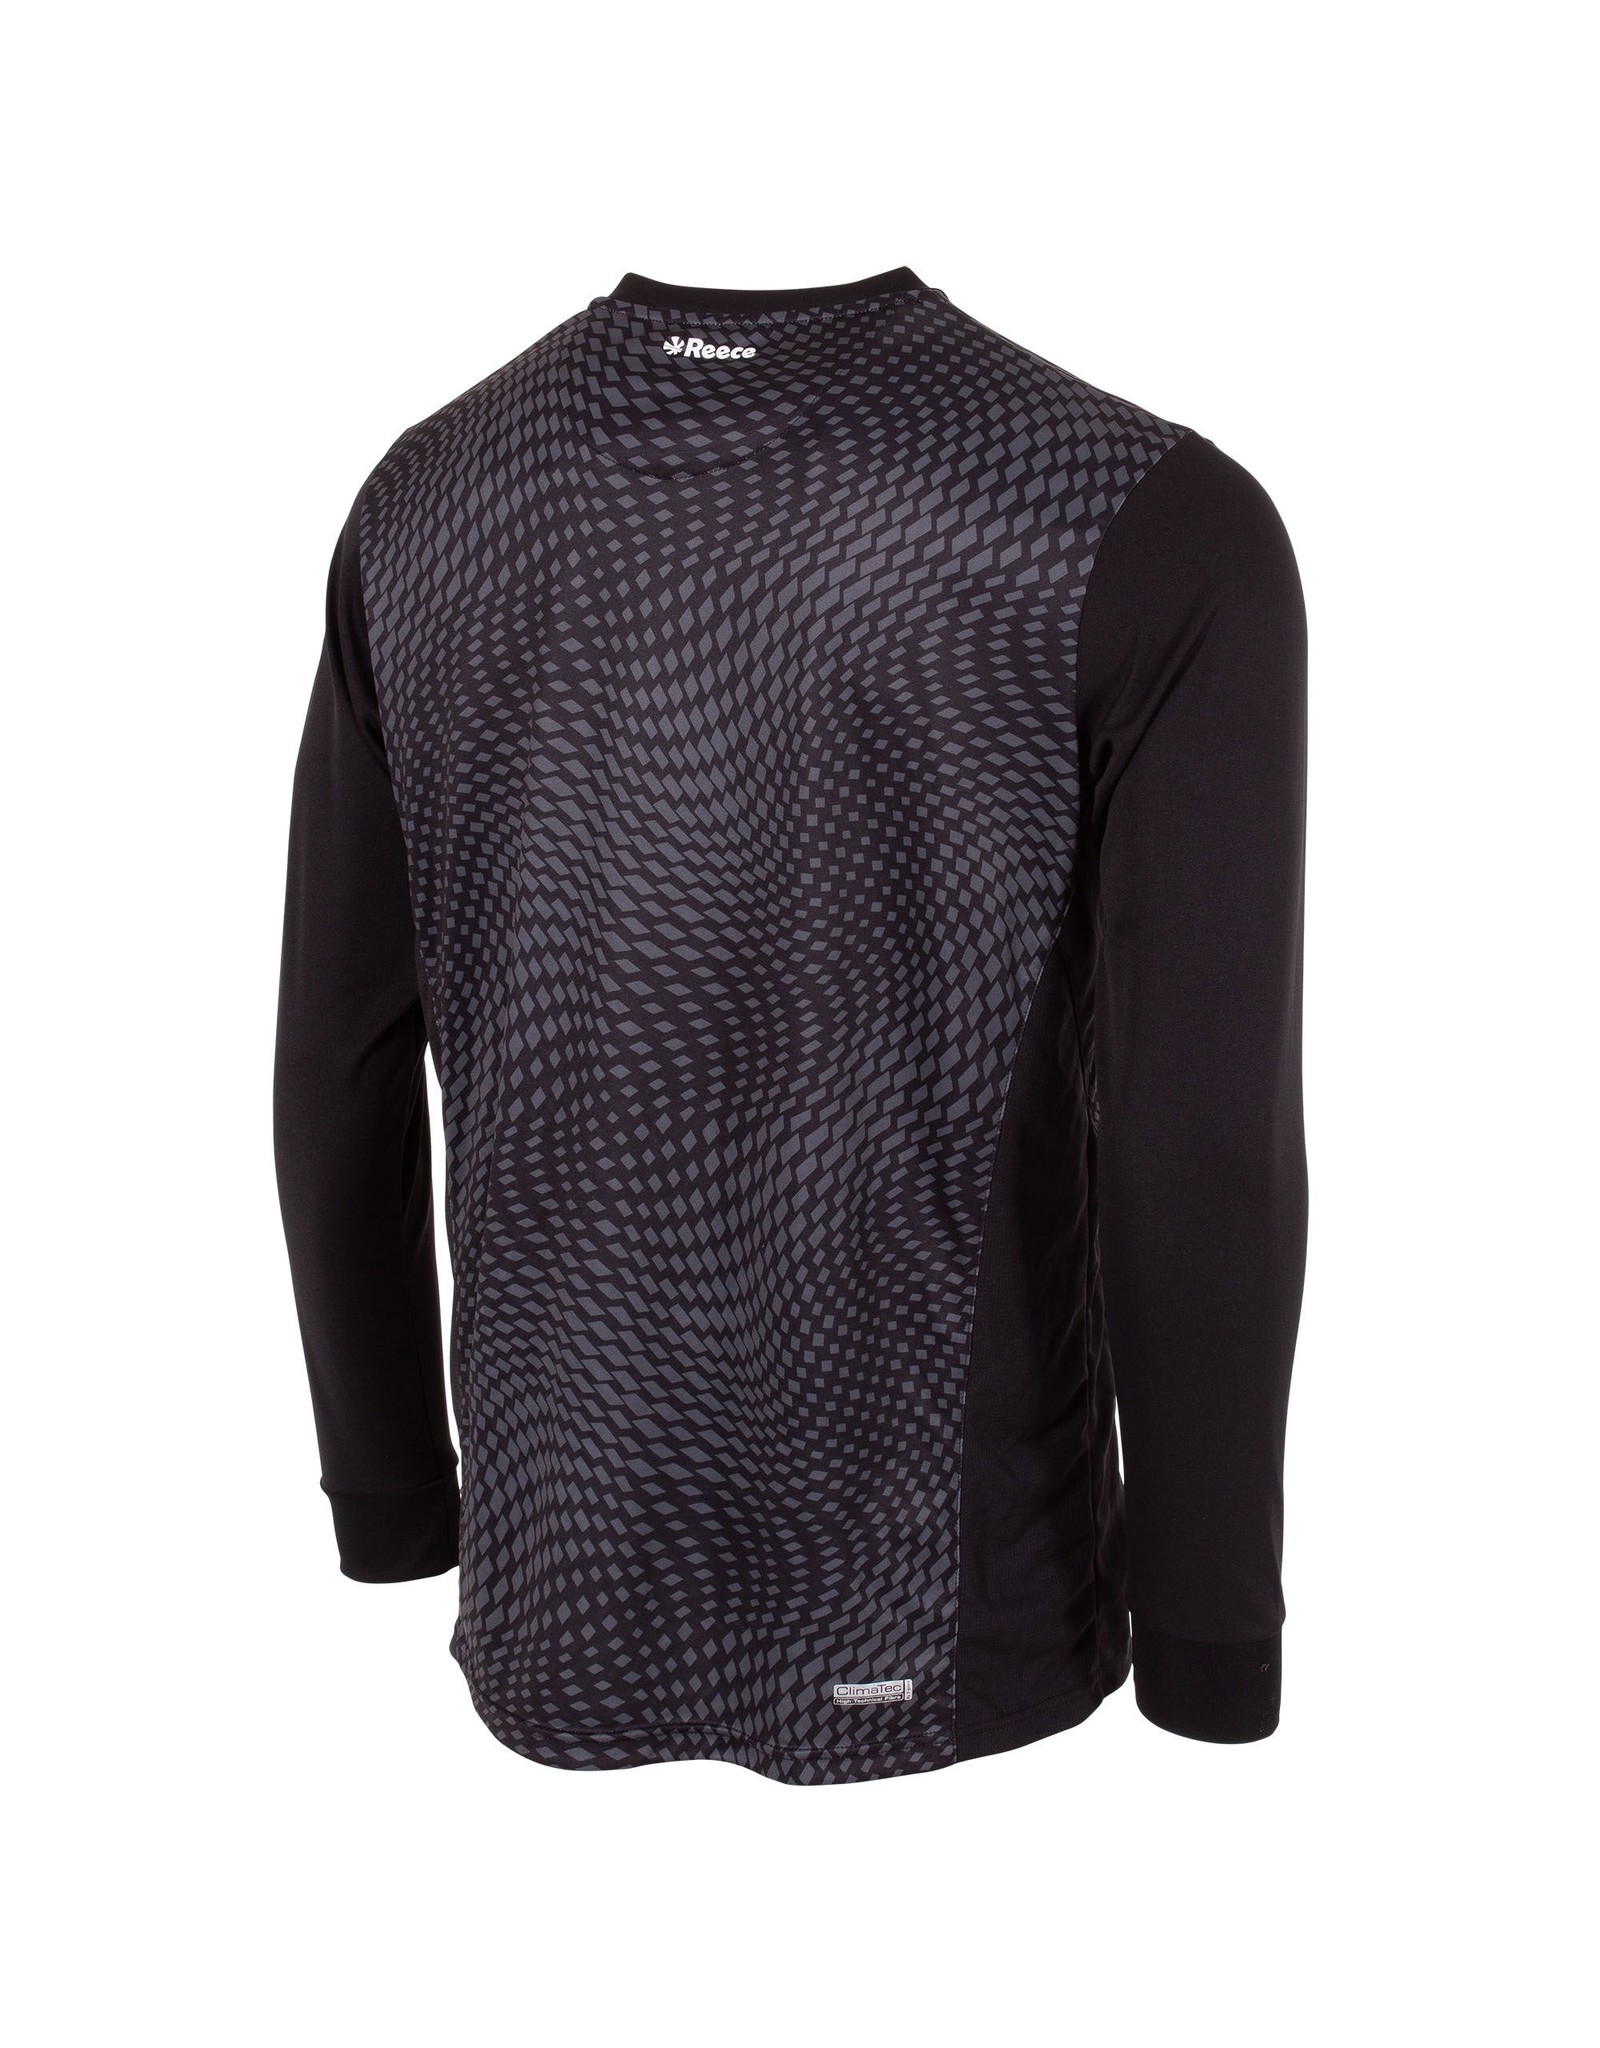 Reece Australia Sydney Keeper Shirt Long Sleeve-Black